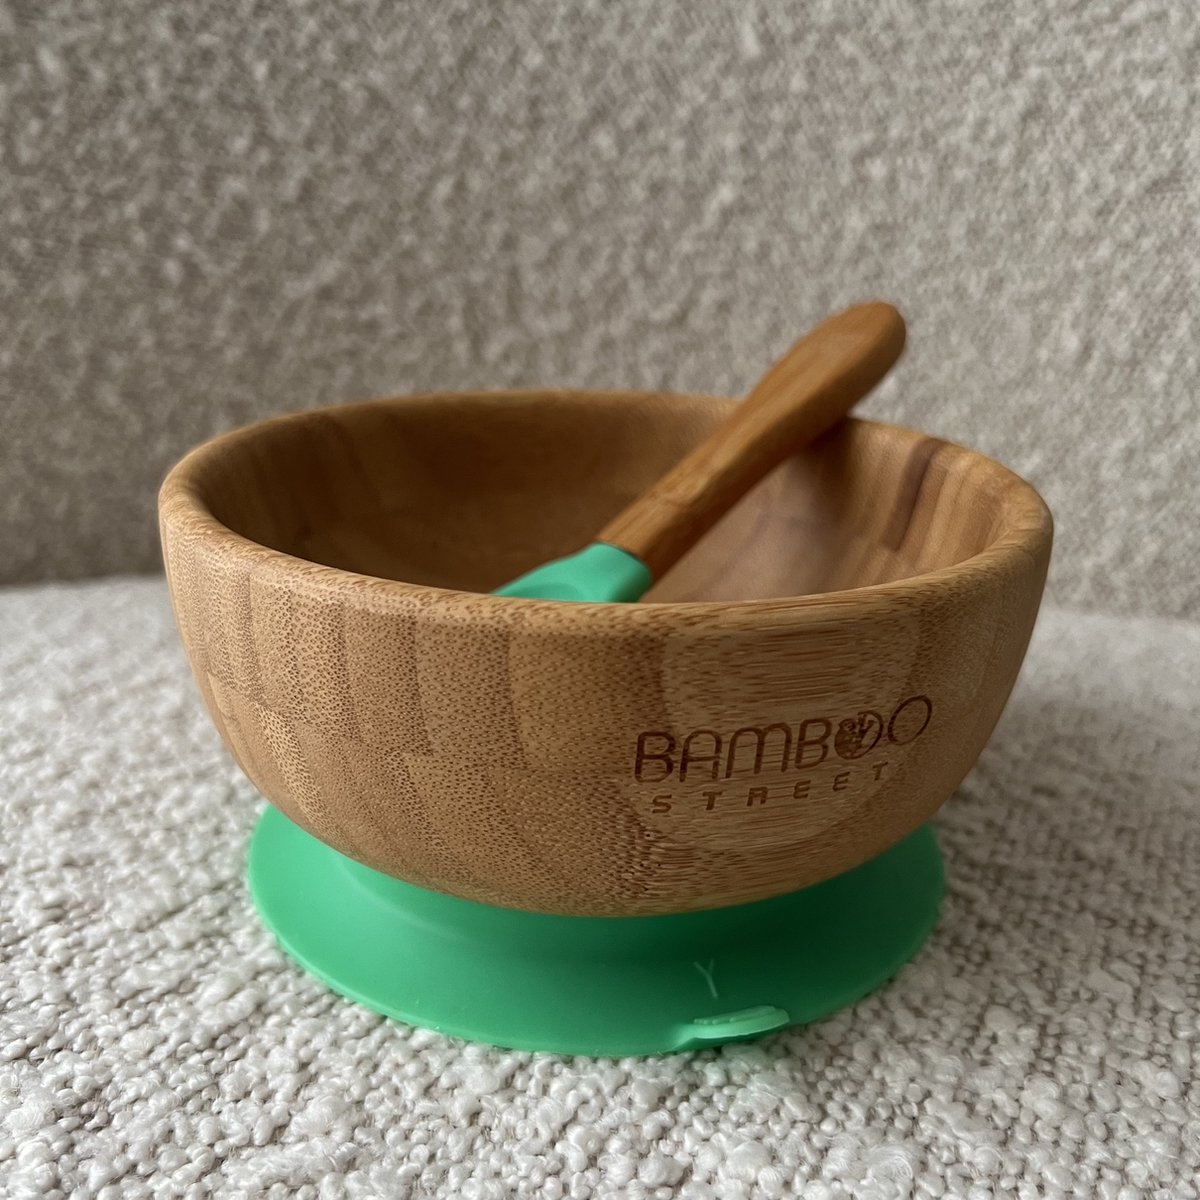 Bamboe Street bamboo bowl organisch bakje - Baby Cadeau - Kinderservies set - Zuignap - Kinderbord - Baby servies - Baby bestek - Melamine & BPA-vrij - Kraamcadeau - Babyshower cadeau - Baby - Geboorte Cadeau - zuignap - groen green - peuters